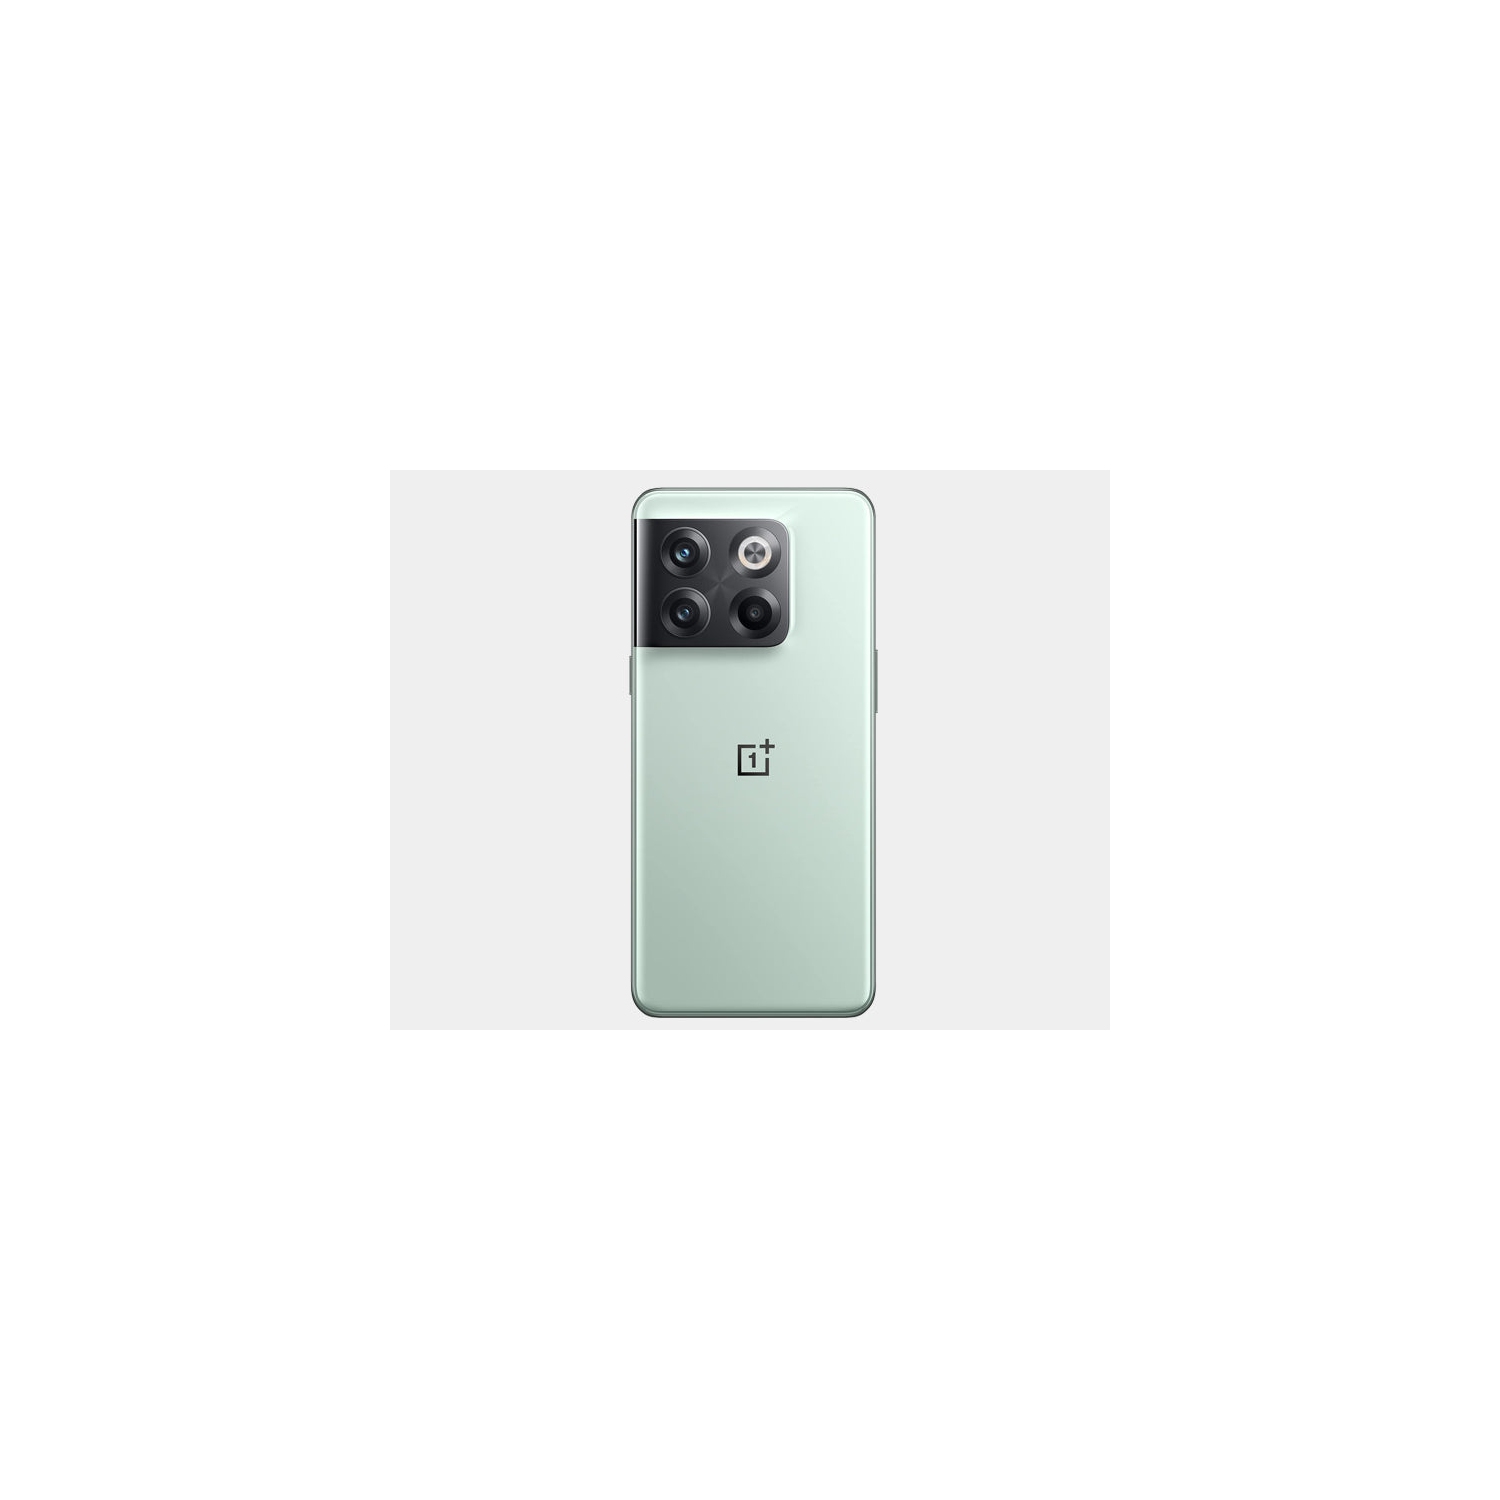  OnePlus 10T 5G Dual-Sim 256GB ROM + 16GB RAM (GSM only  No  CDMA) Factory Unlocked 5G Smartphone (Jade Green) - International Version :  Cell Phones & Accessories